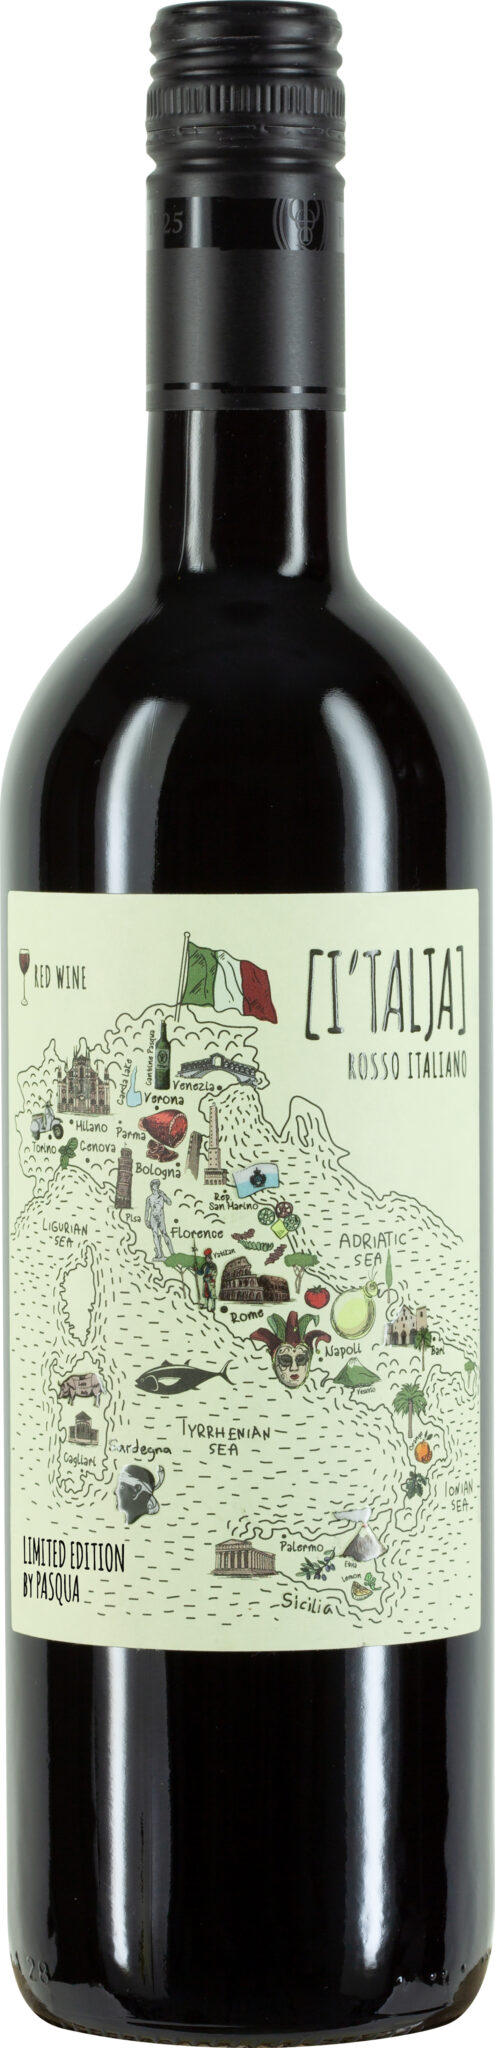 Pasqua I'TALJA, Vino Rosso Italiano, Limited Edition